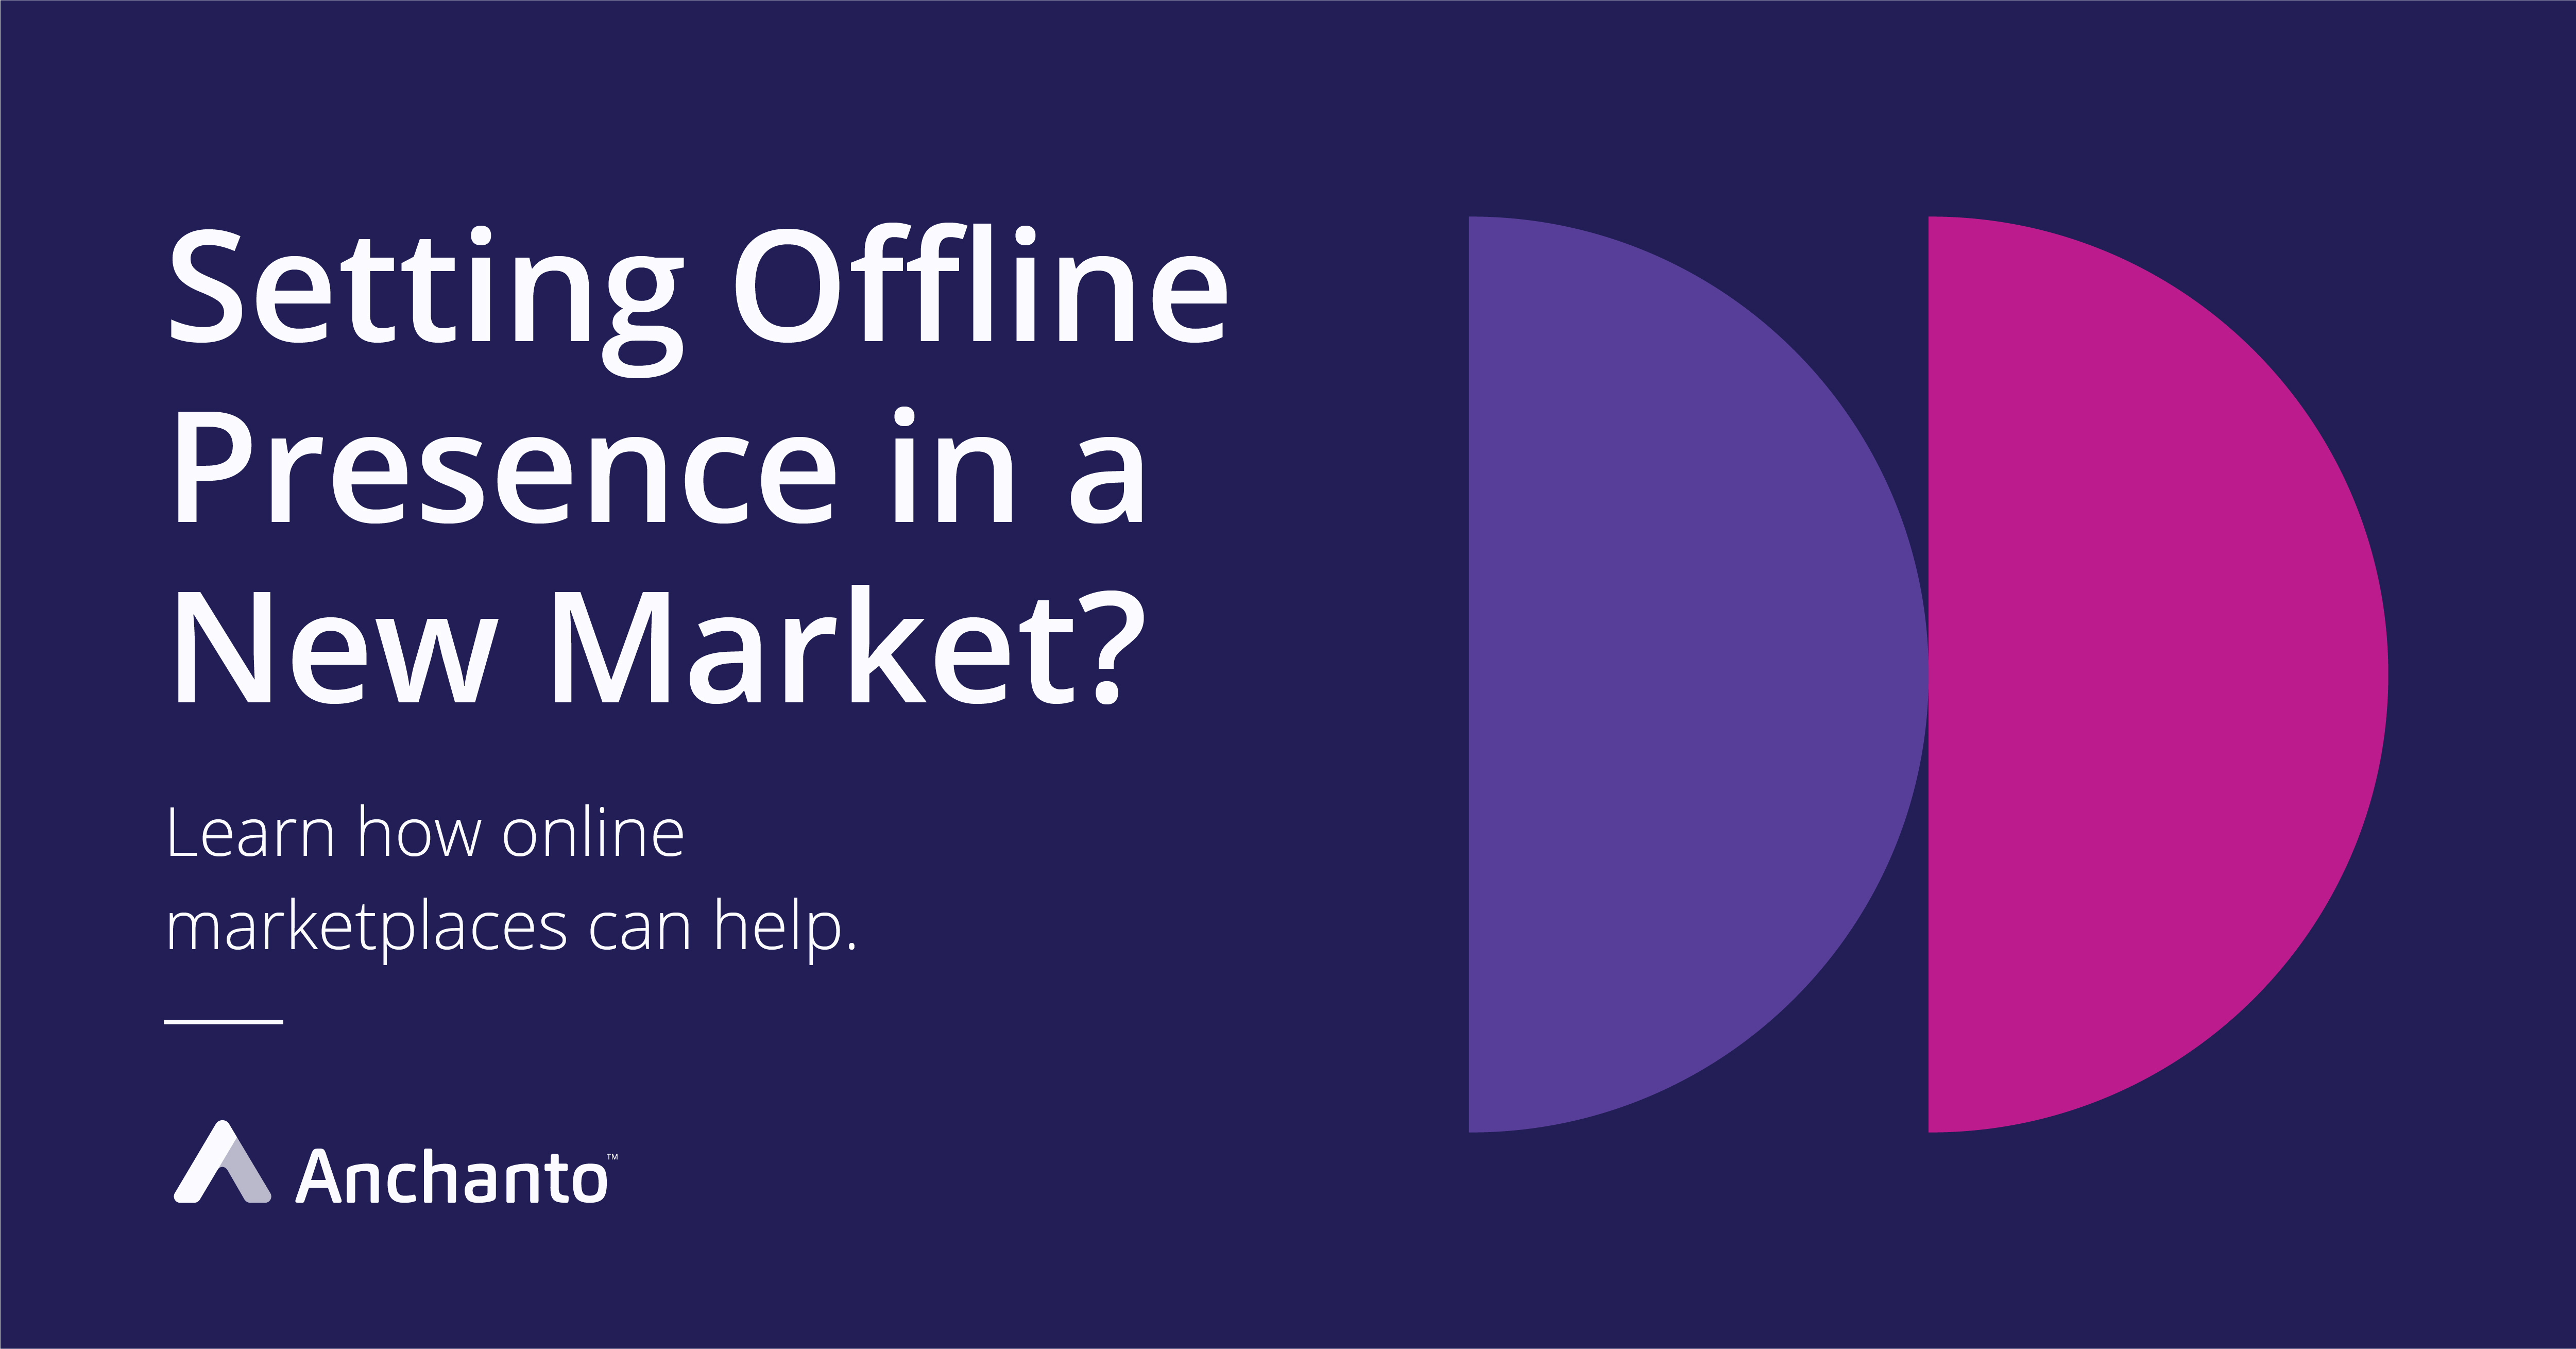 Build offline presence in a new market